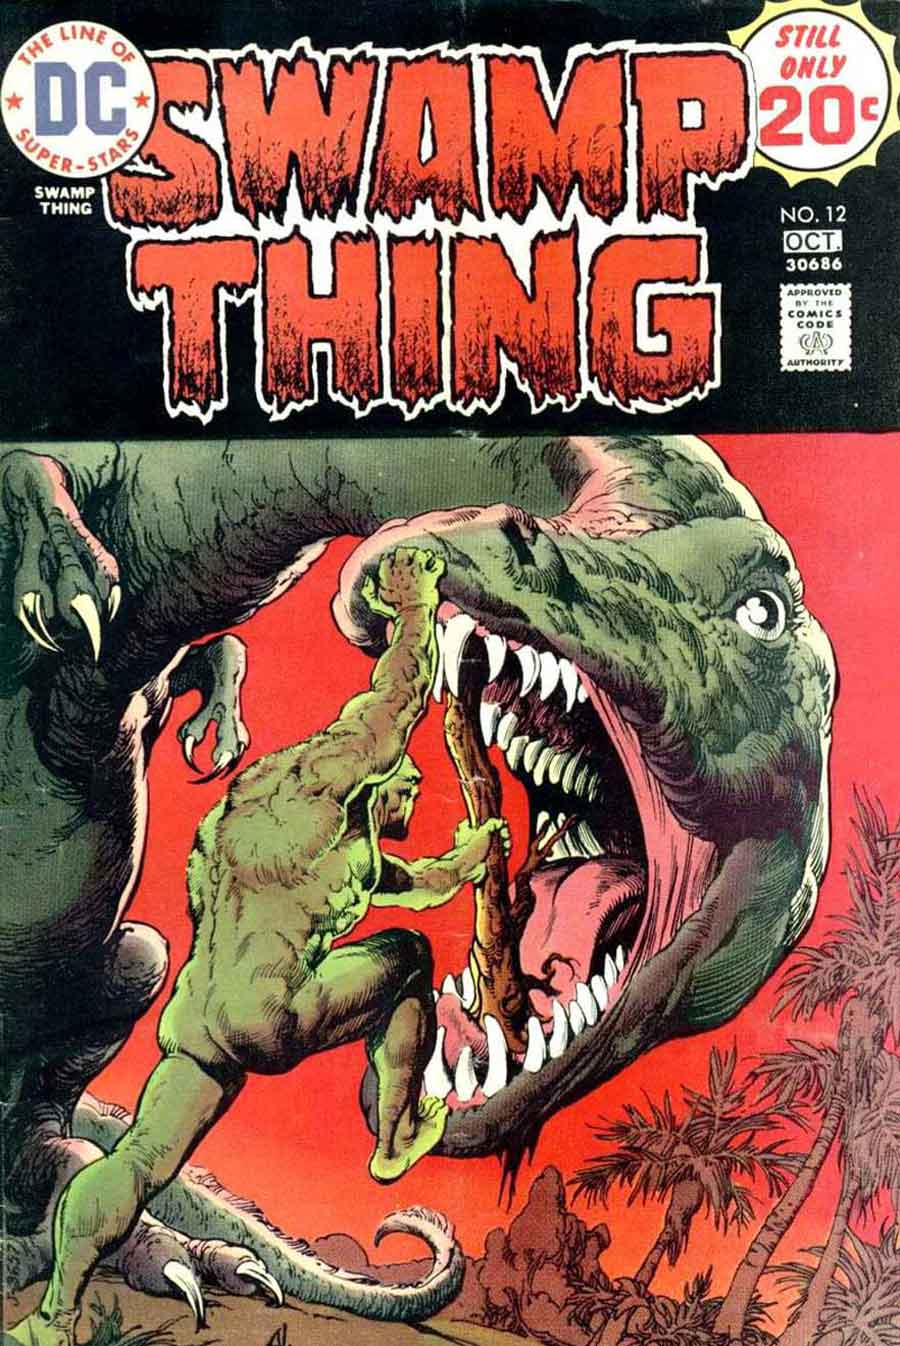 Swamp Thing v1 #12 1970s bronze age dc comic book cover art by Nestor Redondo